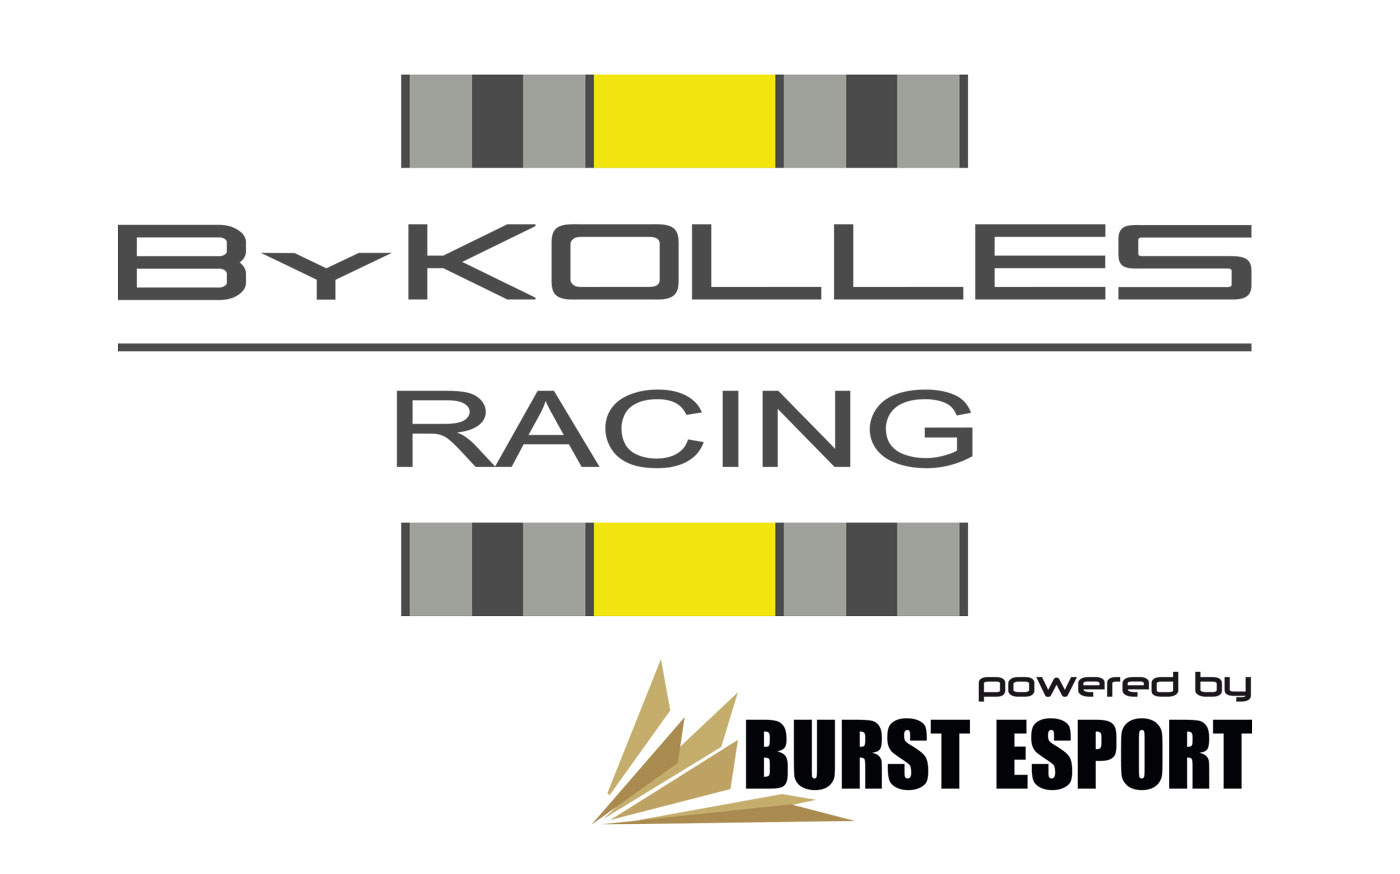 ByKOLLES Burst Esport announces participation in the new Le Mans Virtual Series